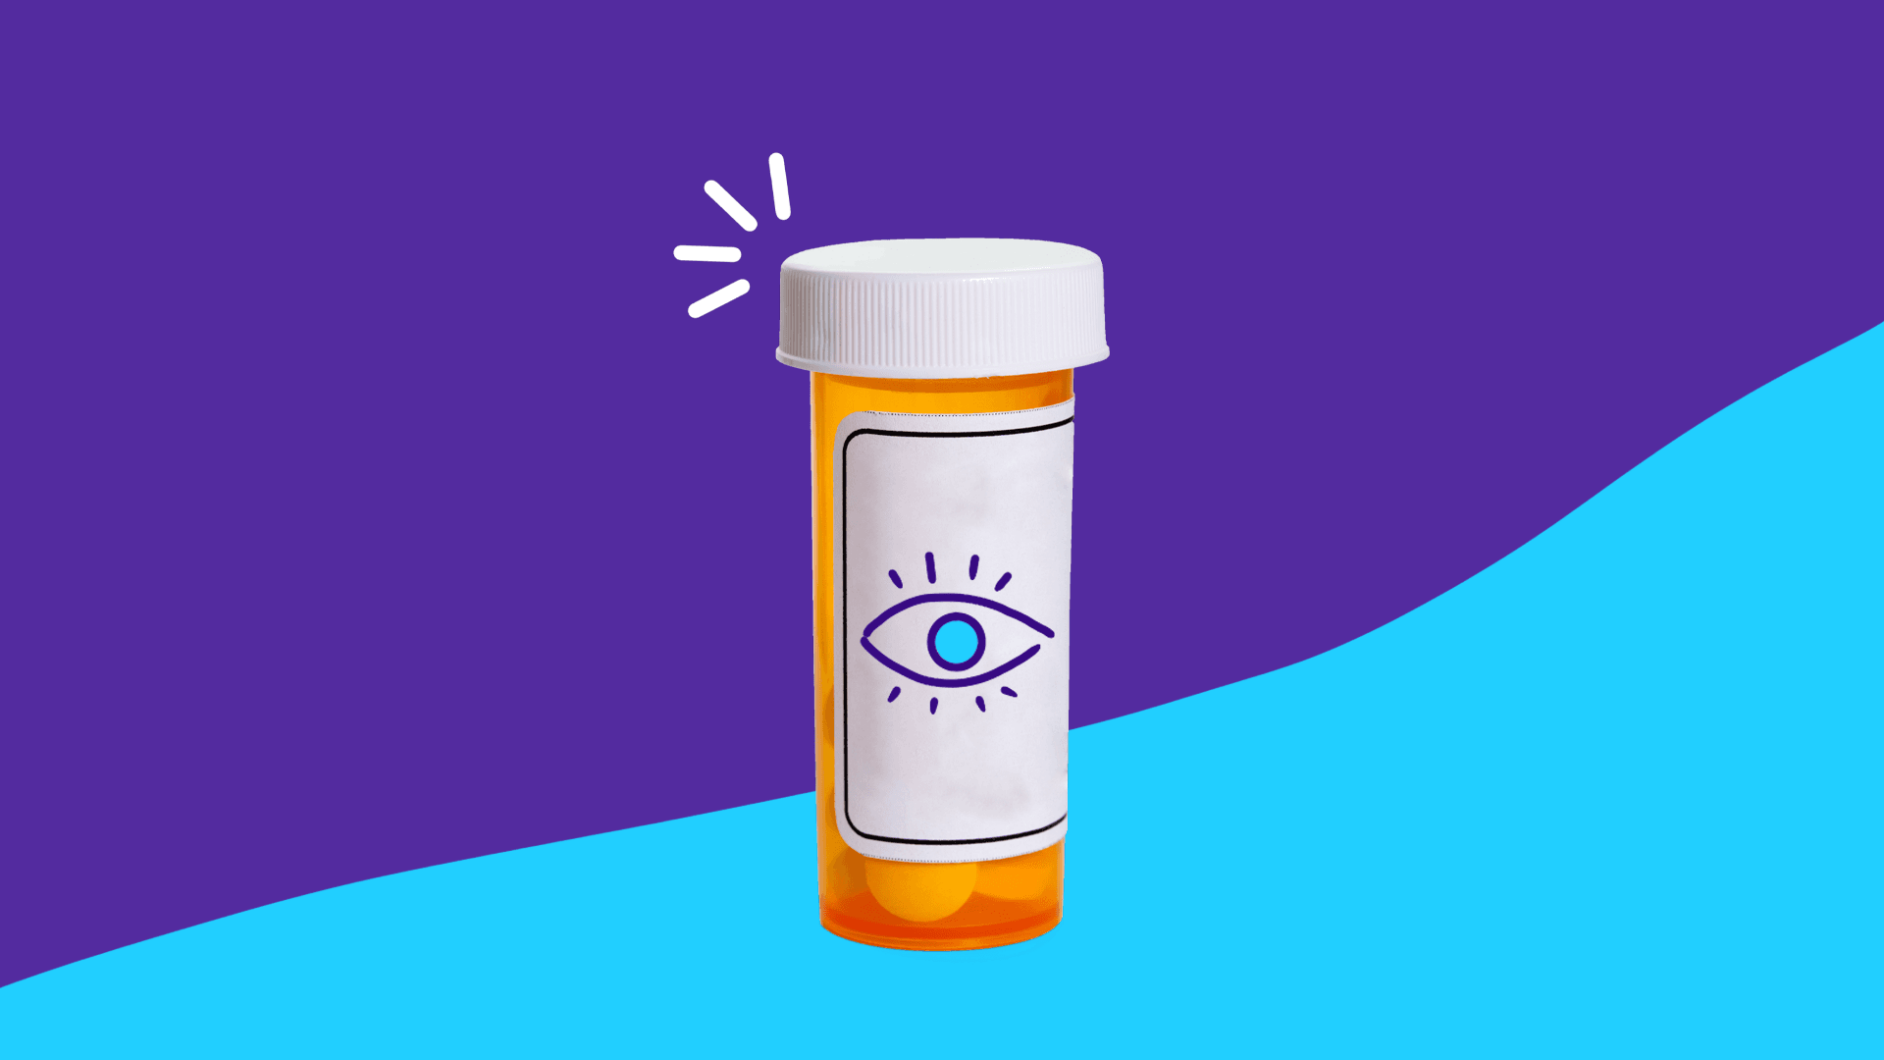 Rx pill bottle with eye illustration: What is blepharitis?